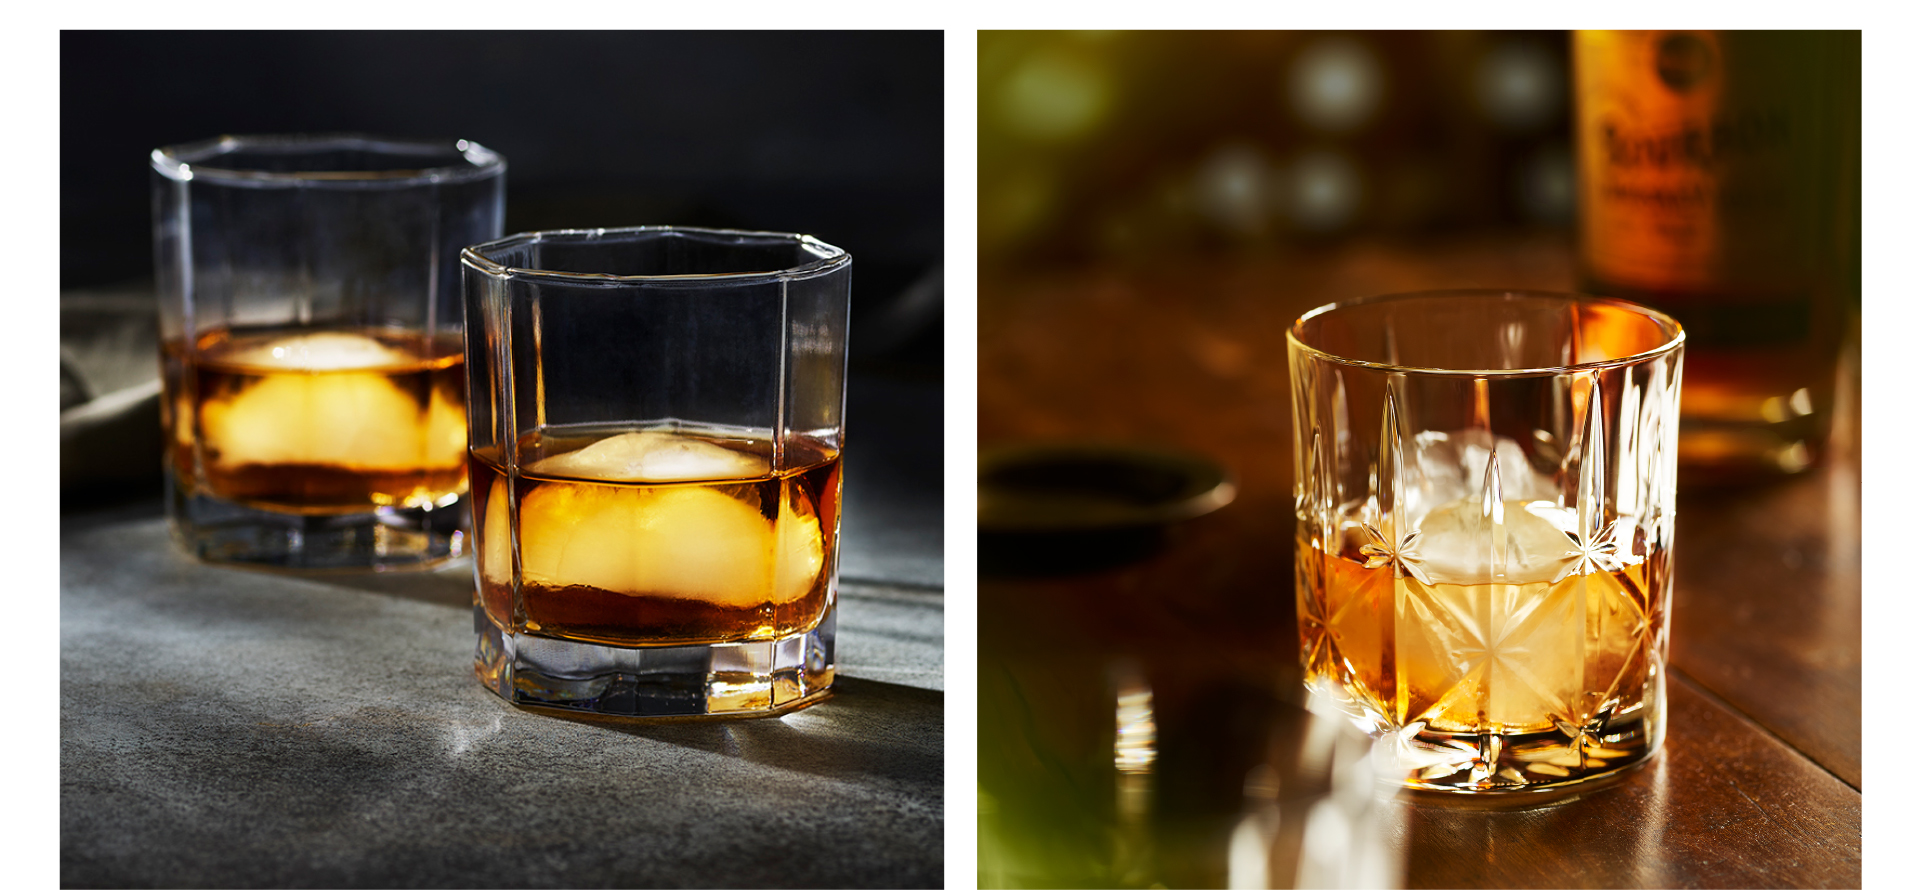 Schnucks – Burbon Whiskey